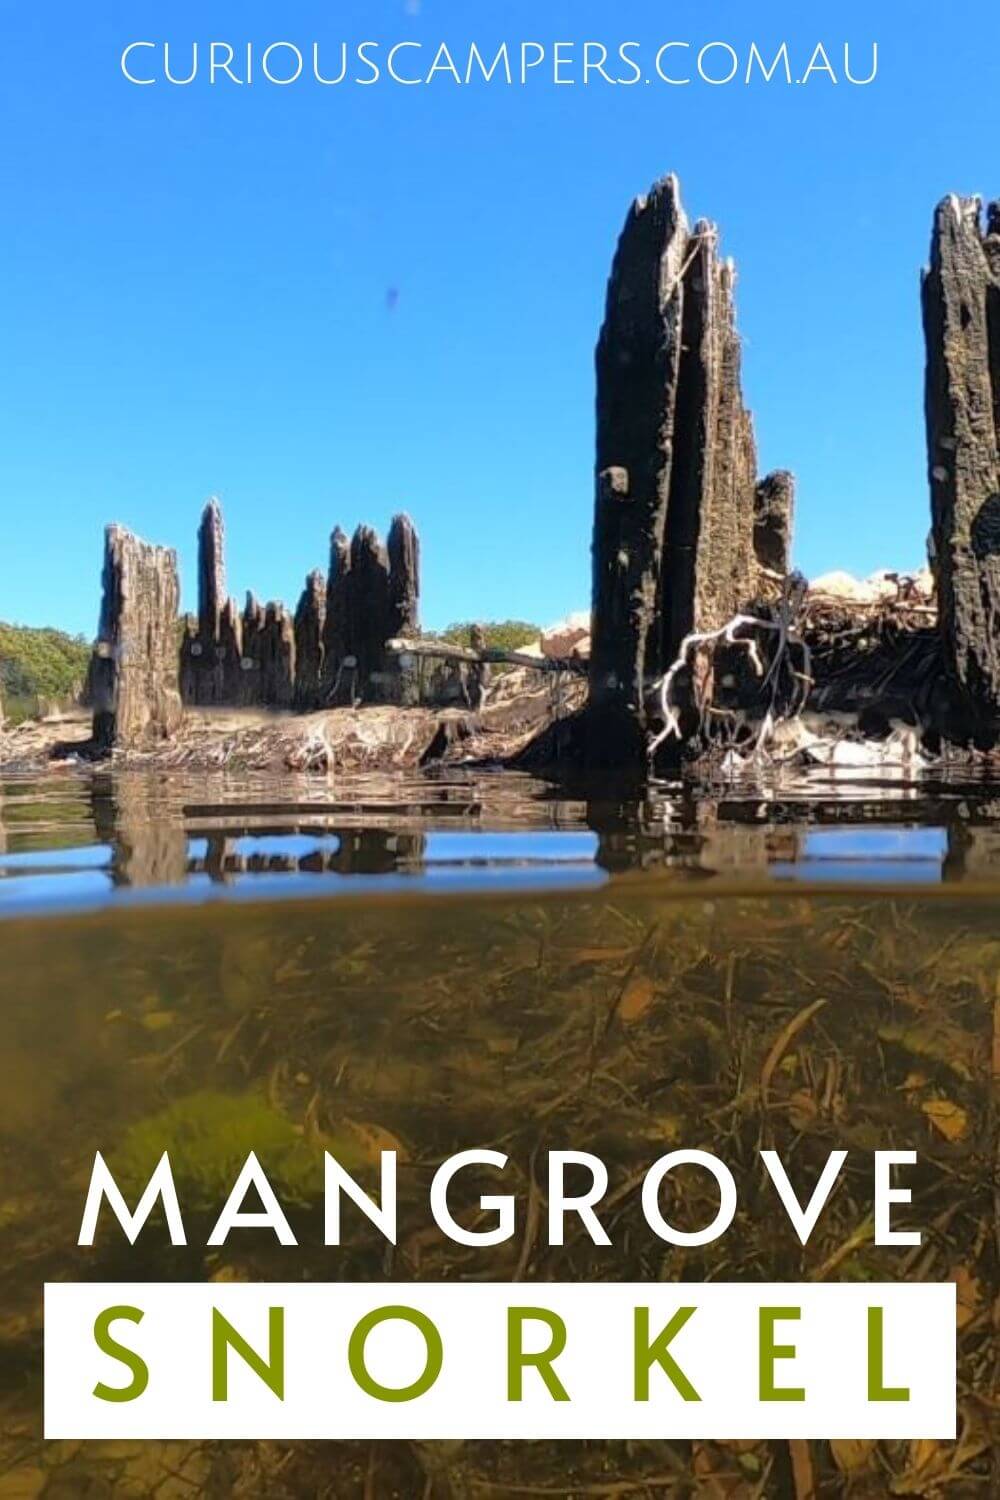 Port Gawler Mangrove Snorkel